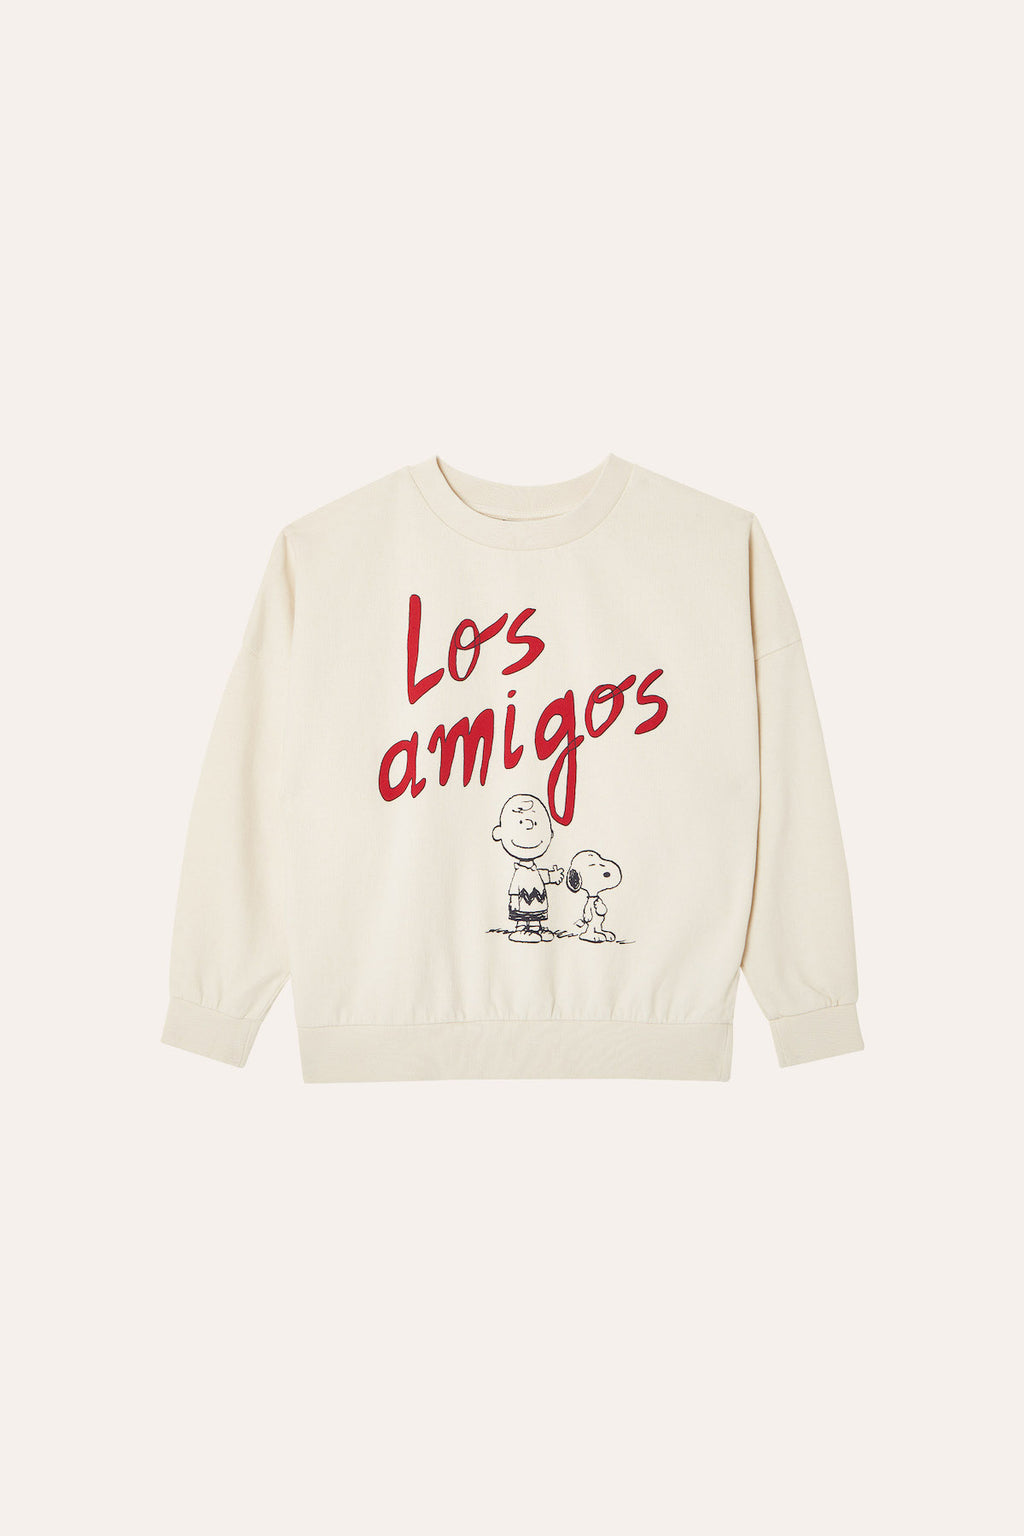 The Campamento Los Amigos Oversized Kids Sweatshirt - White